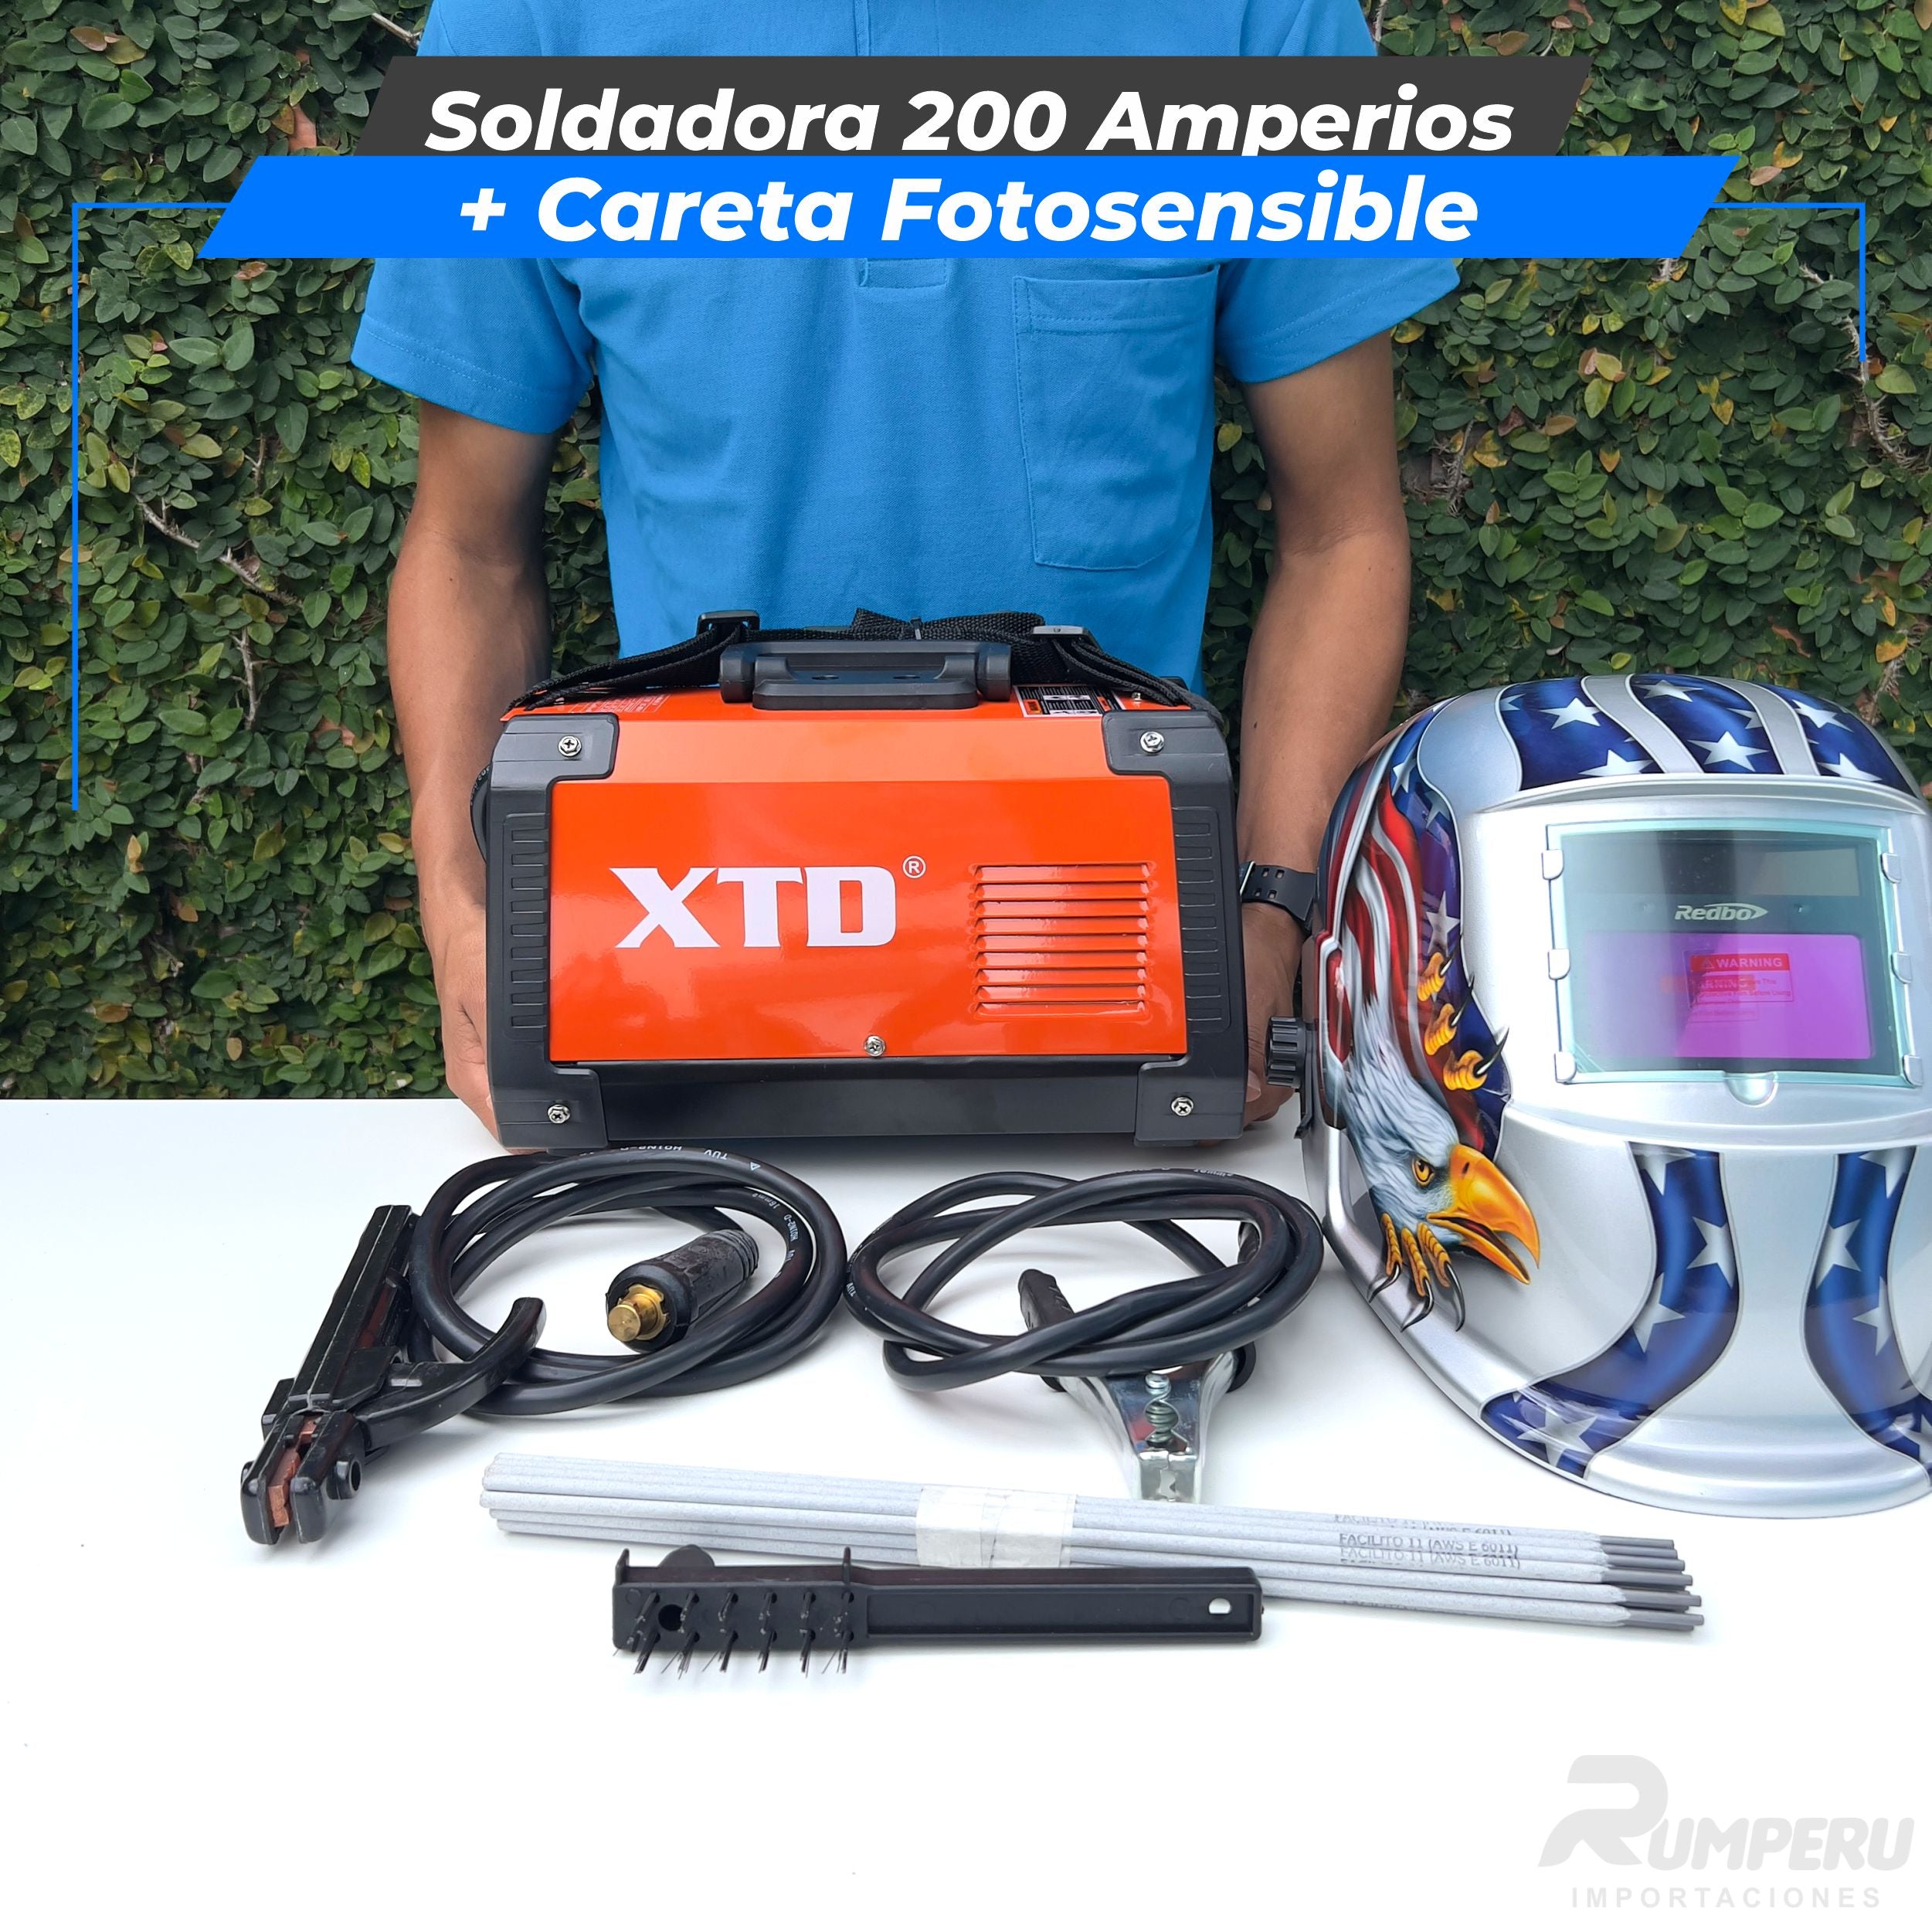 Soldadora 200 Amperios + Careta Fotosensible